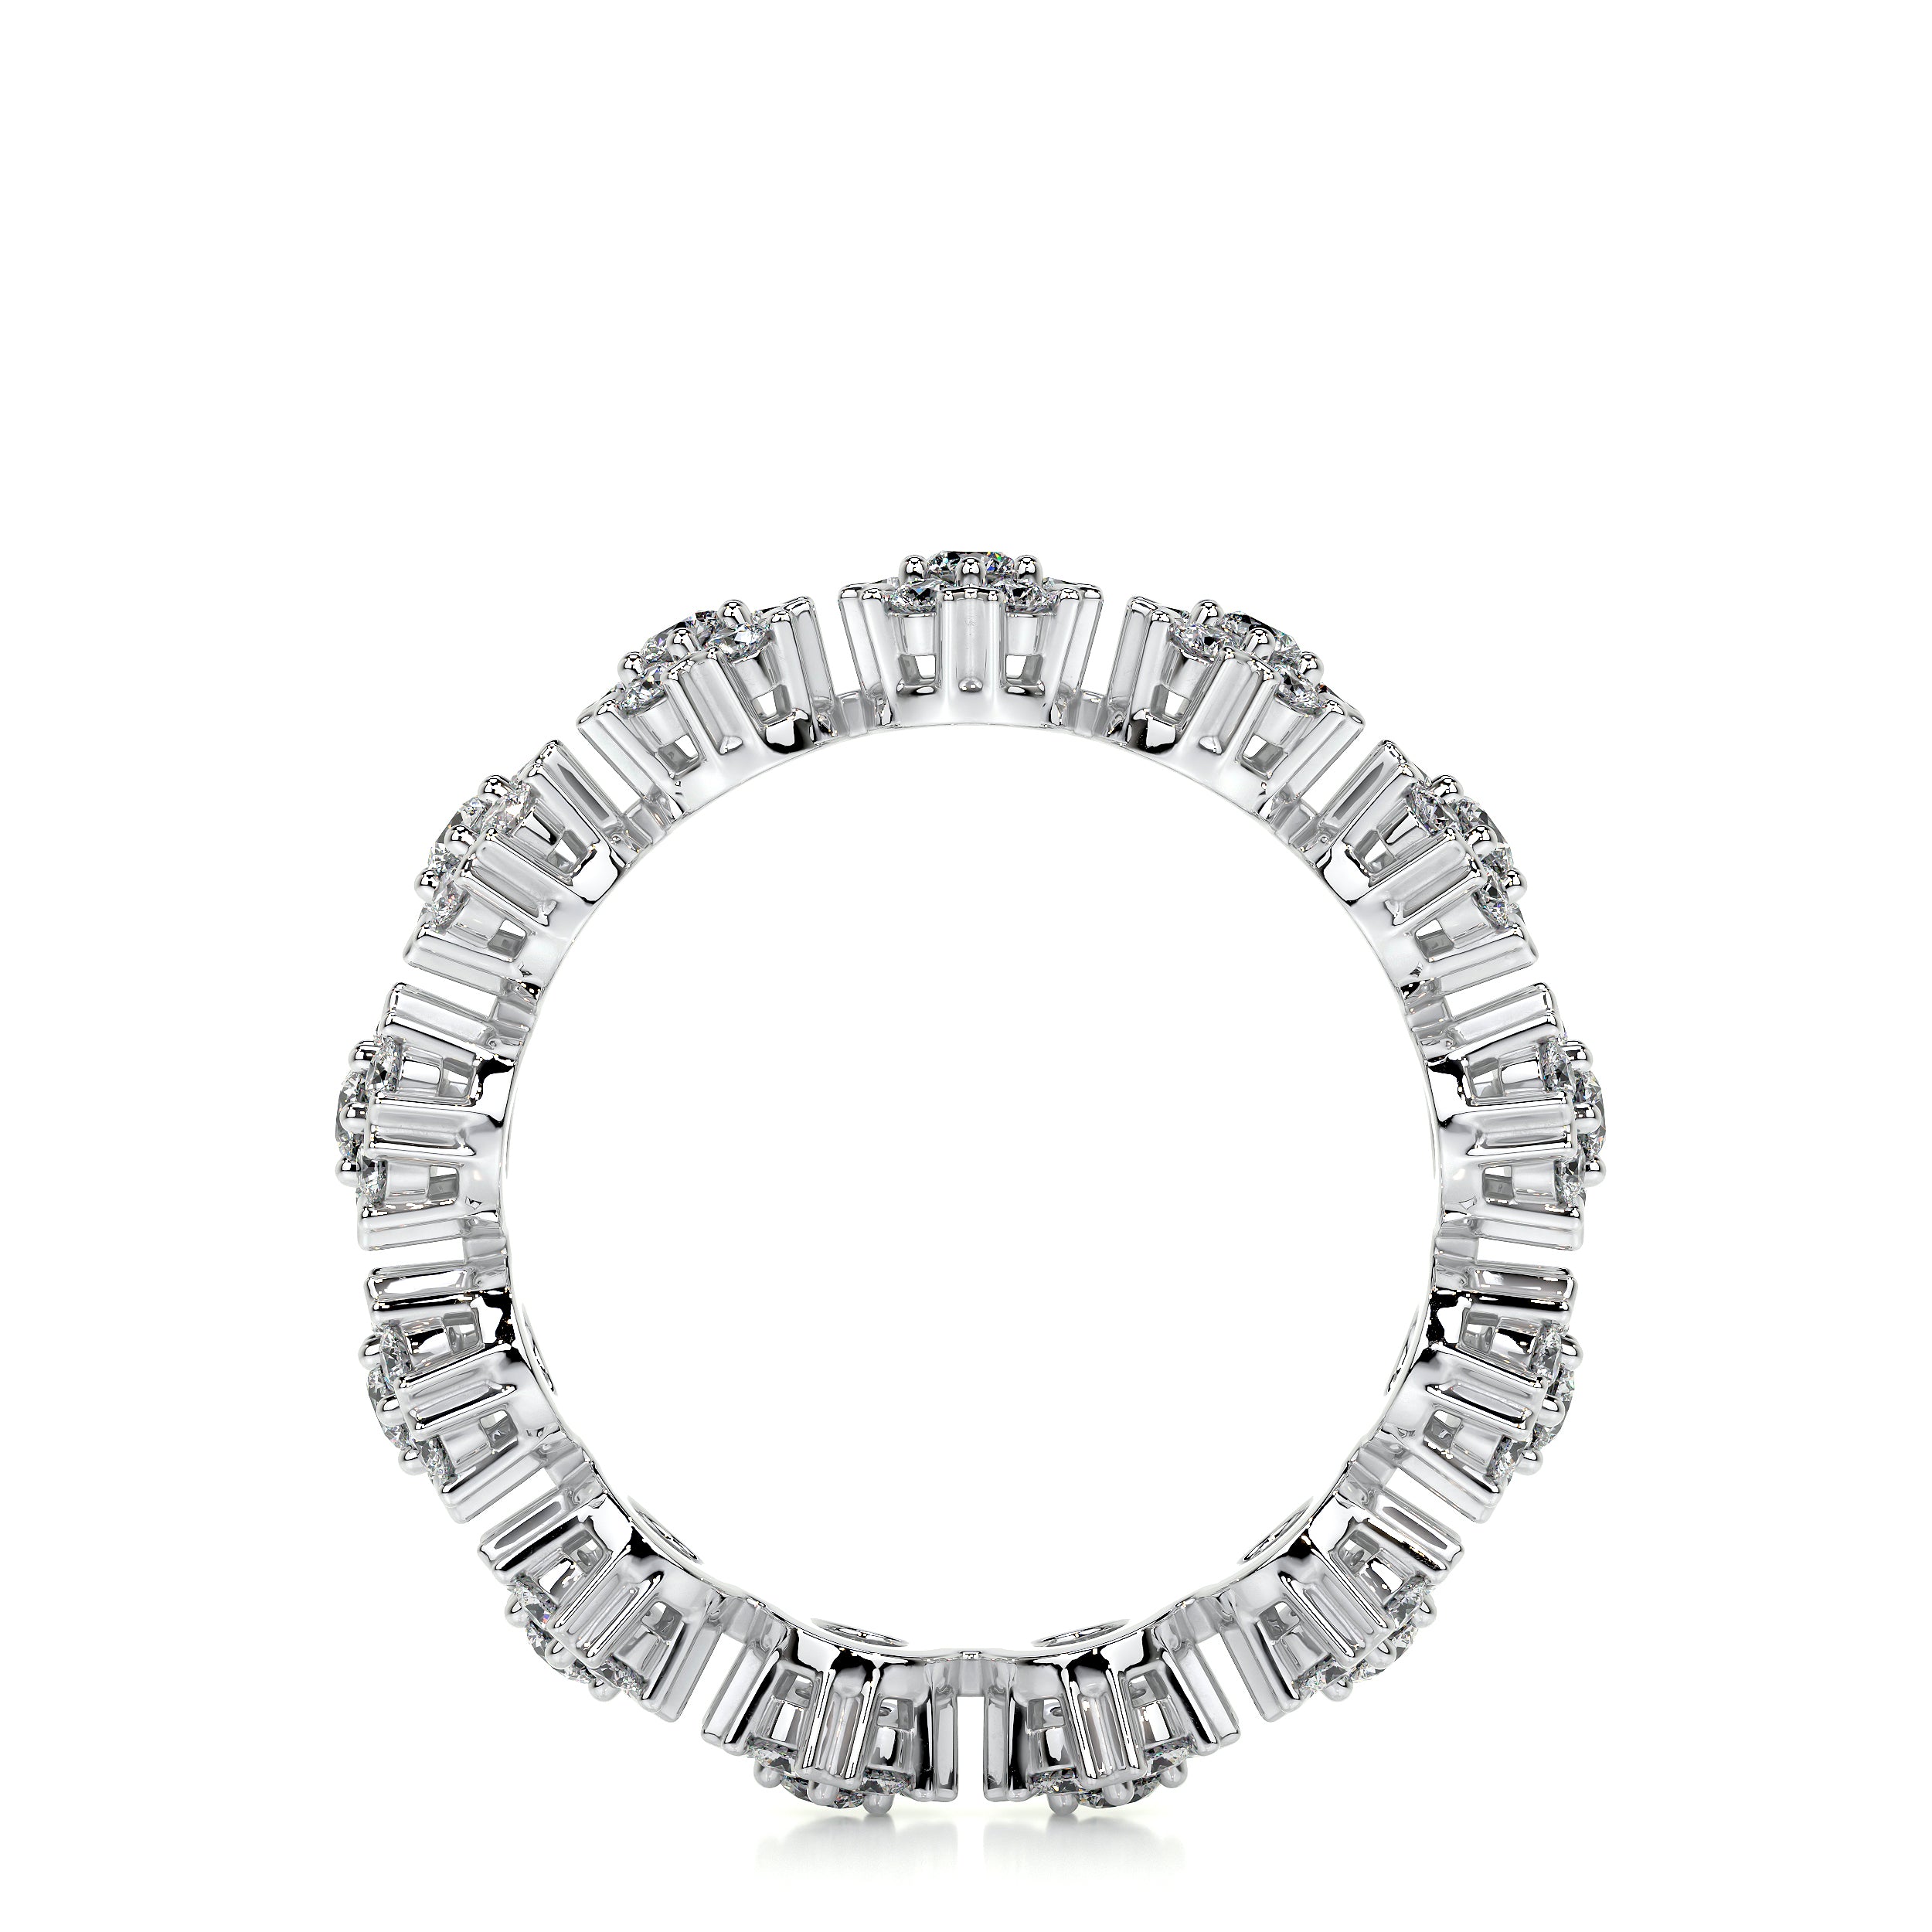 Holly Lab Grown Diamond Wedding Ring   (1 Carat) -Platinum